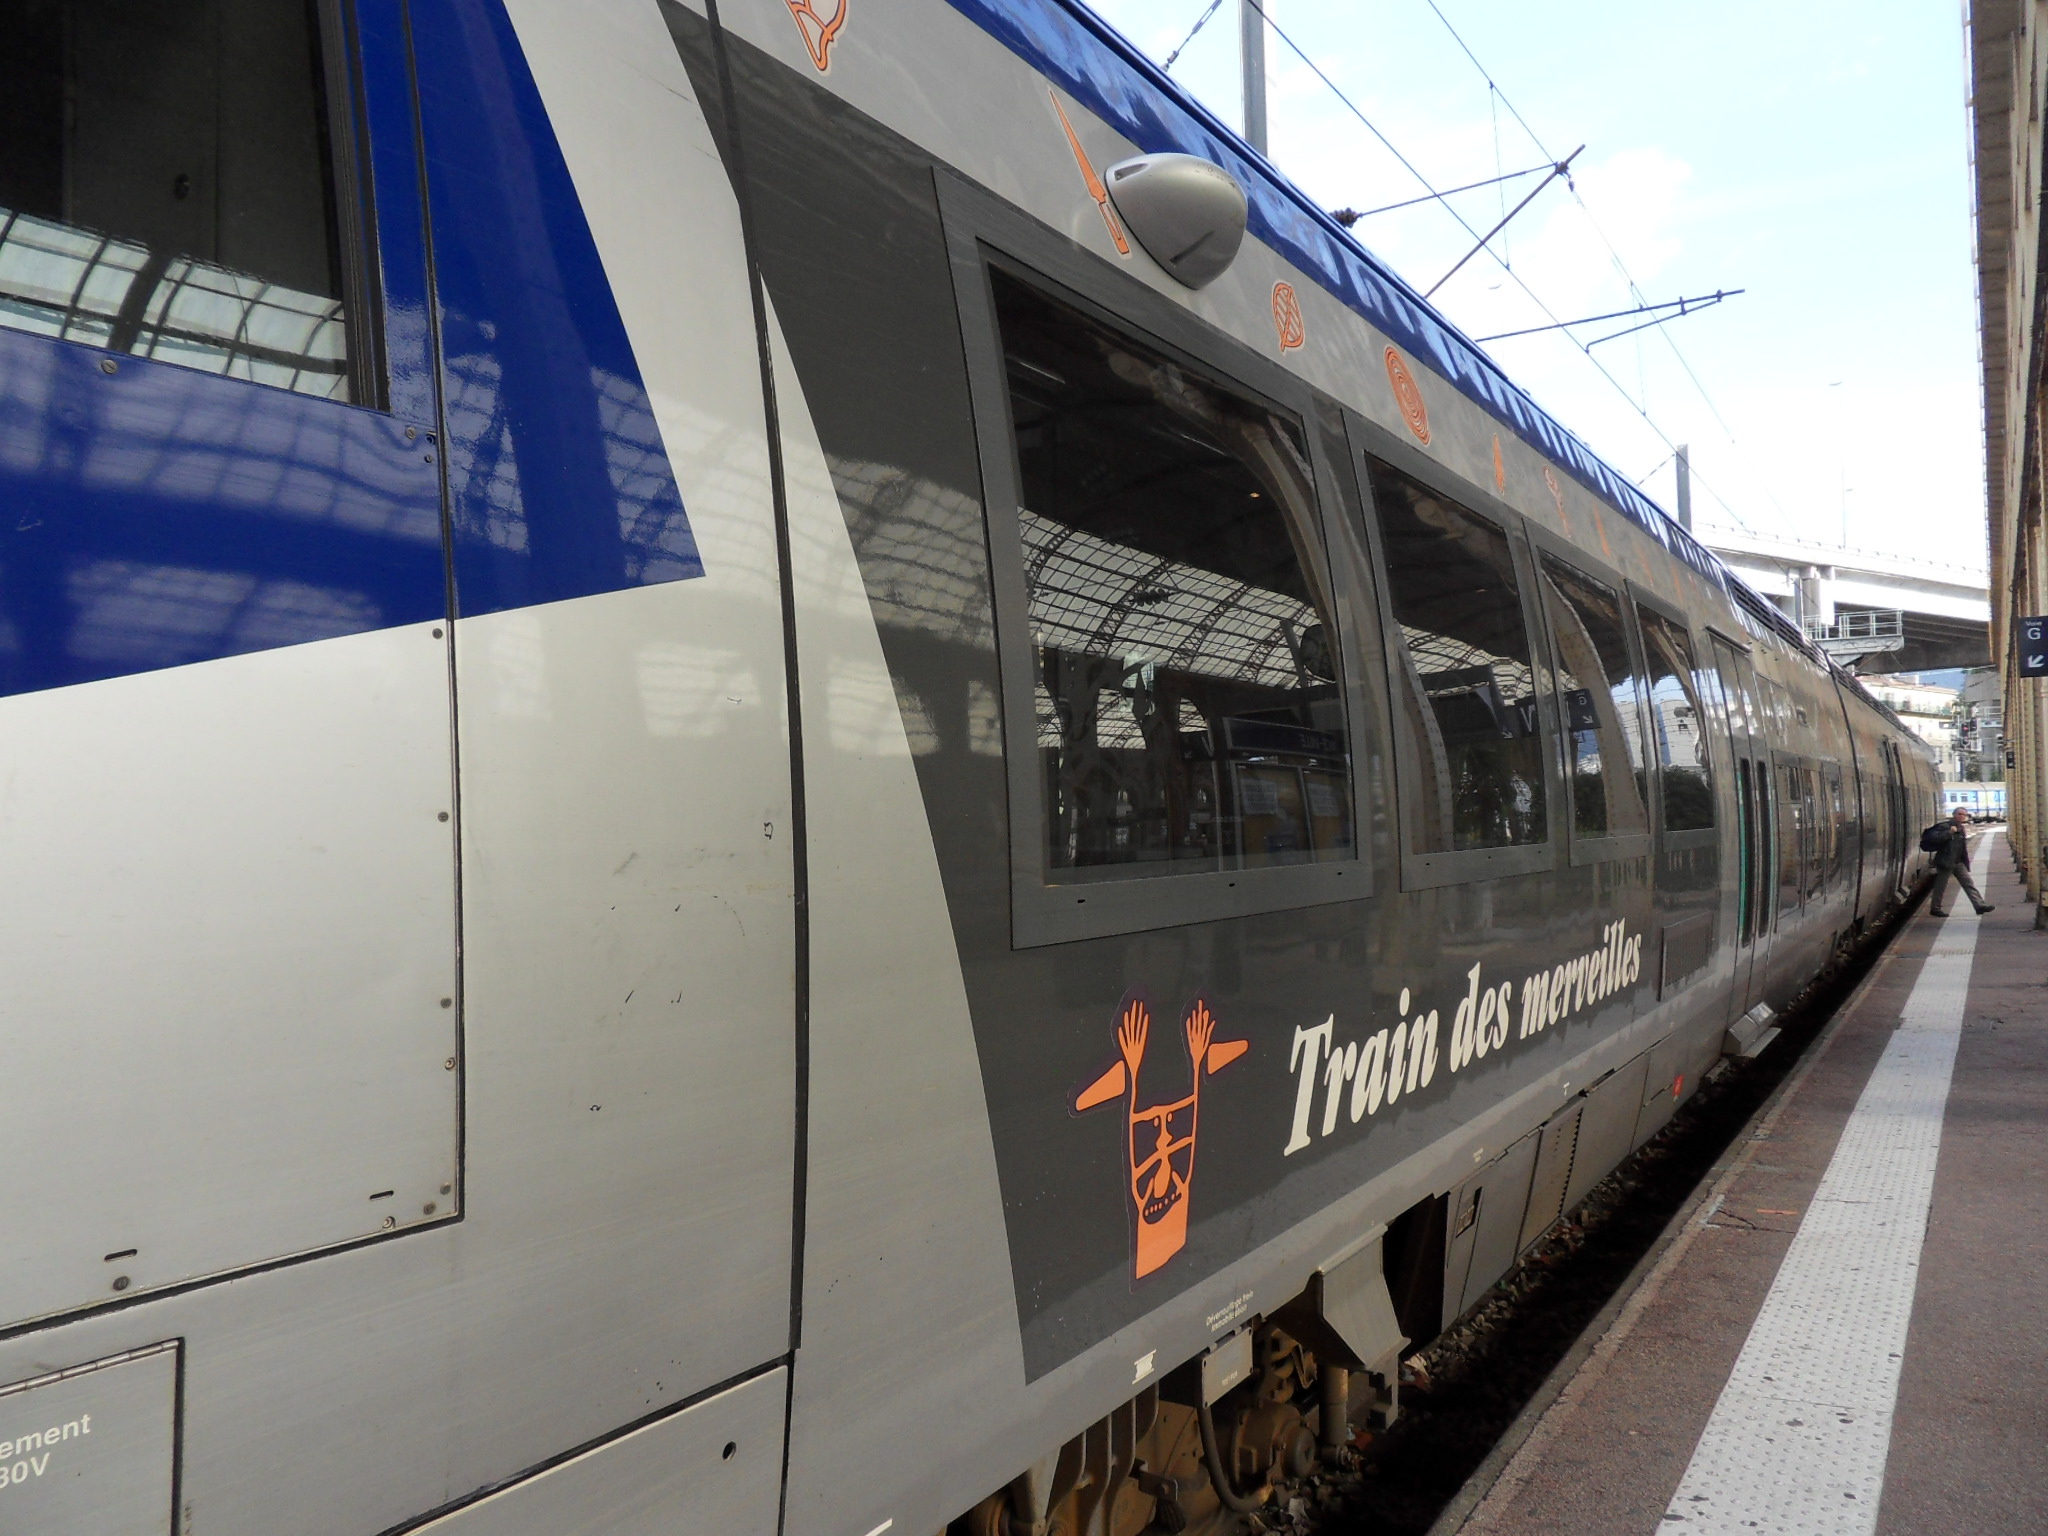 Gare_de_Nice_Train_des_merveilles.JPG